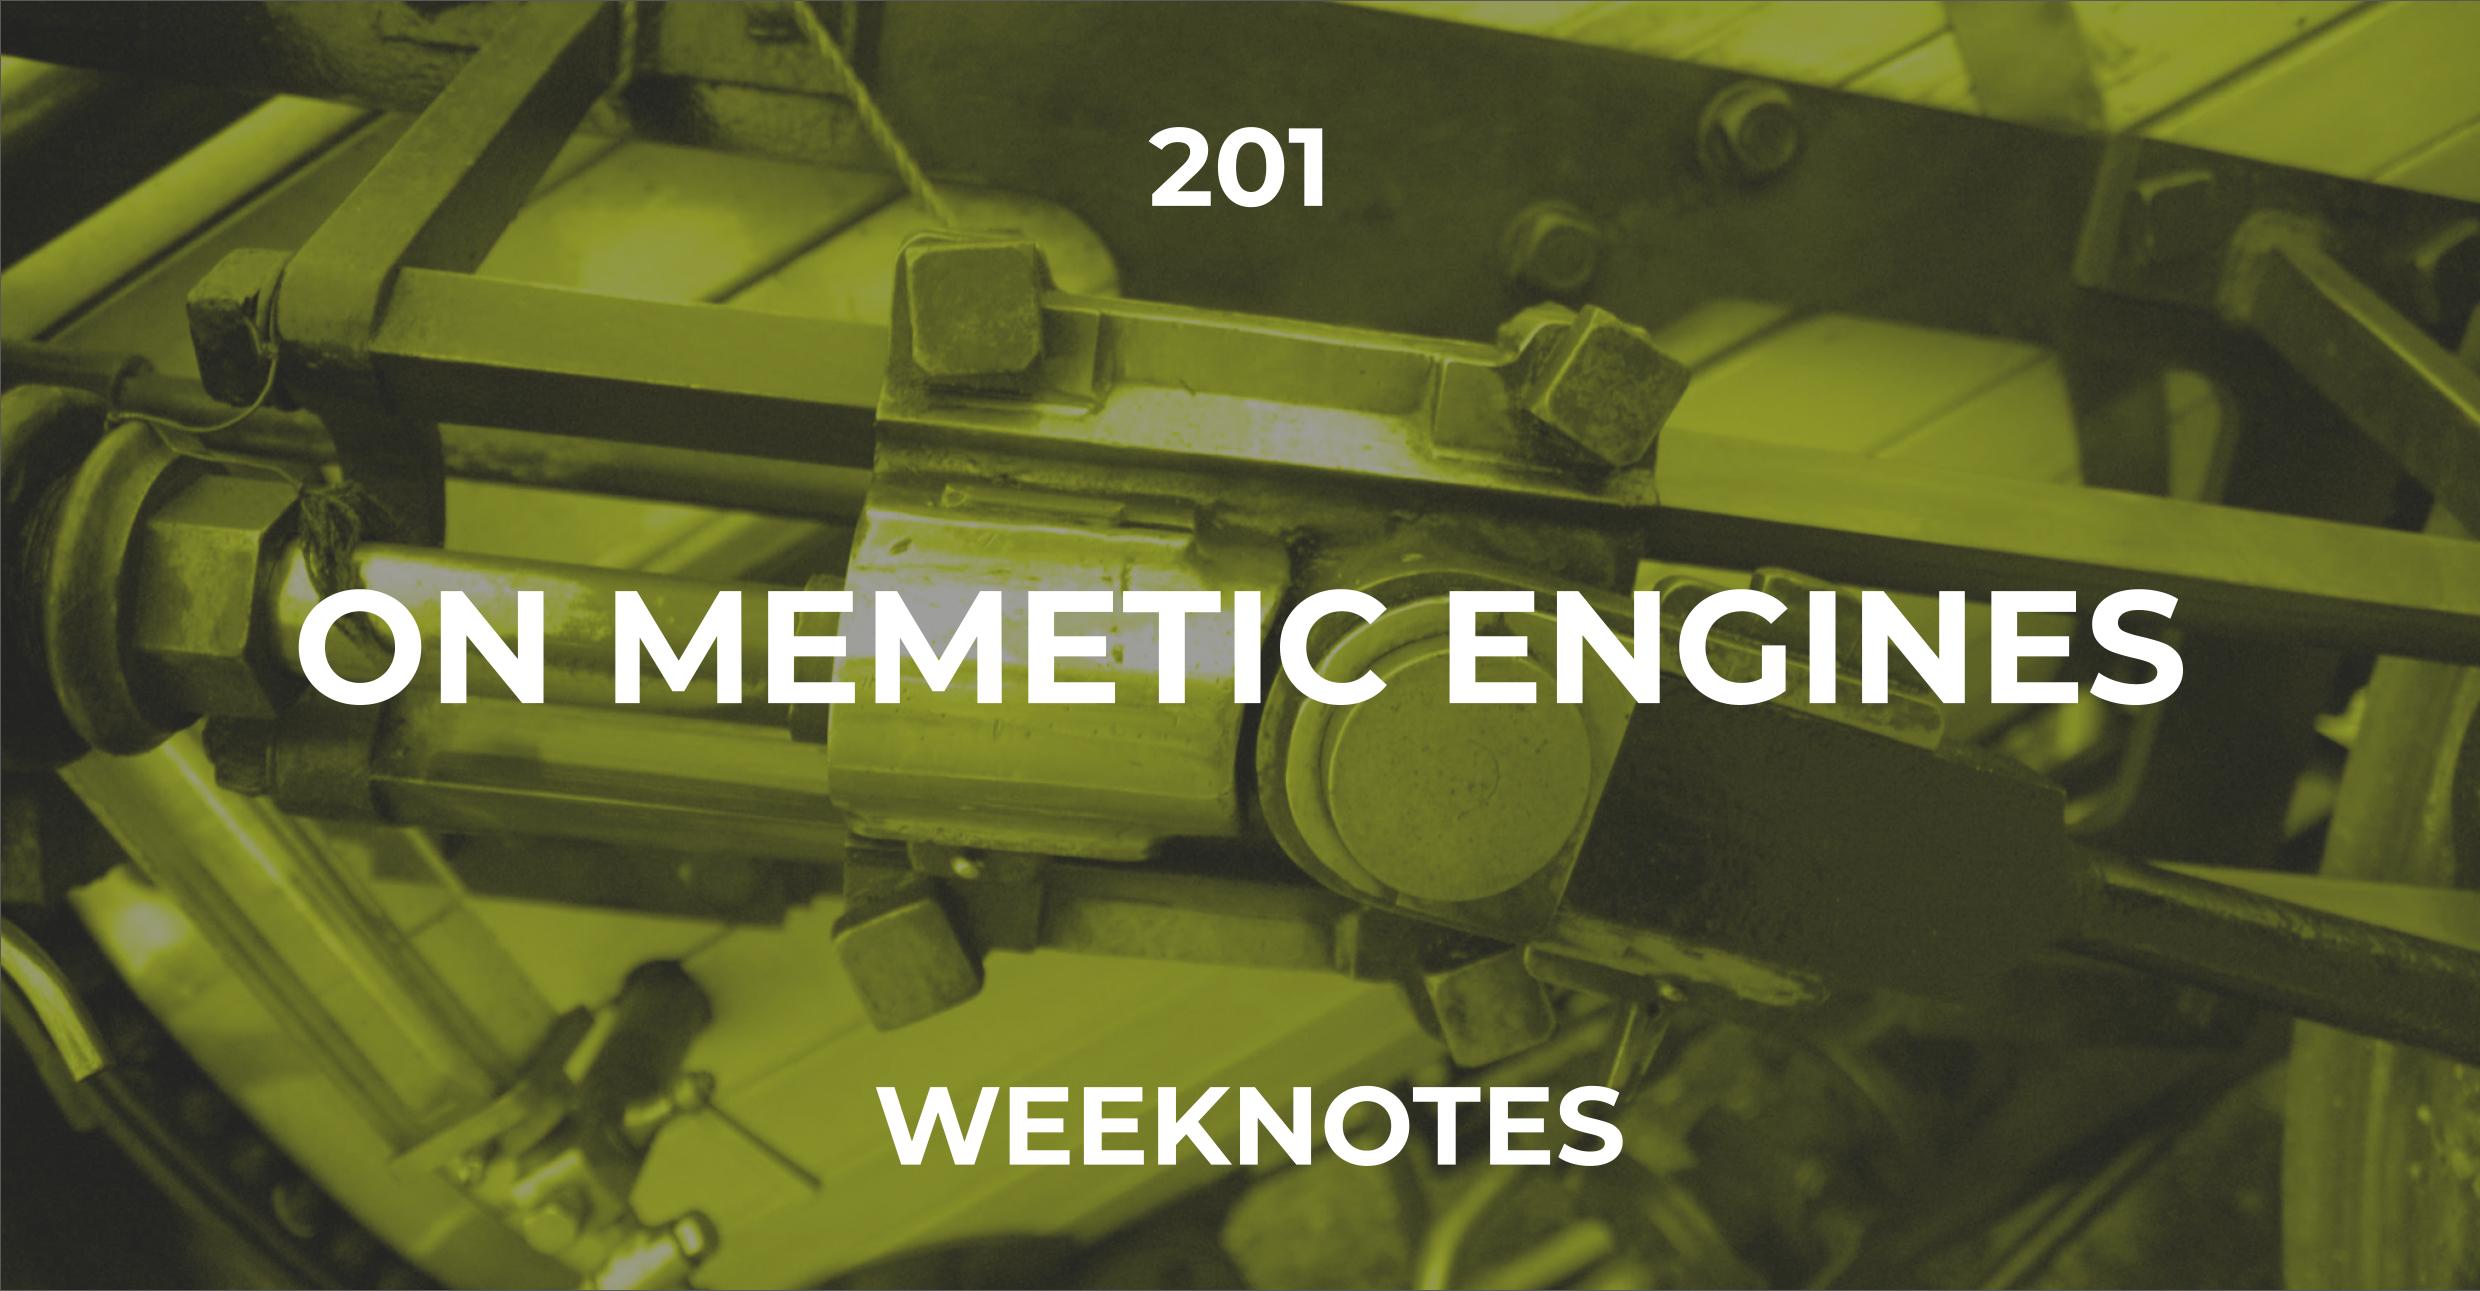 On Memetic Engines